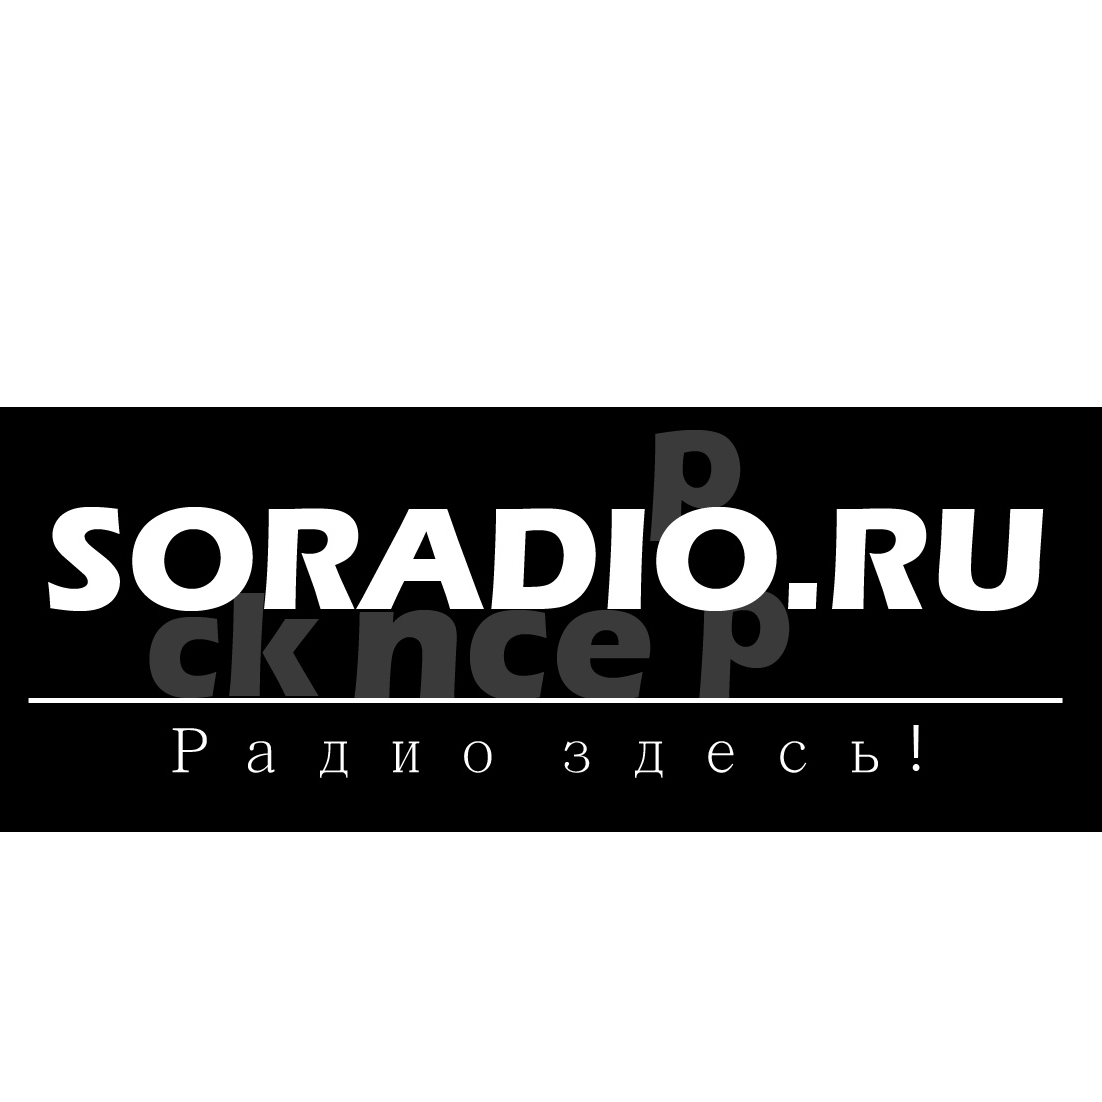 Show radio